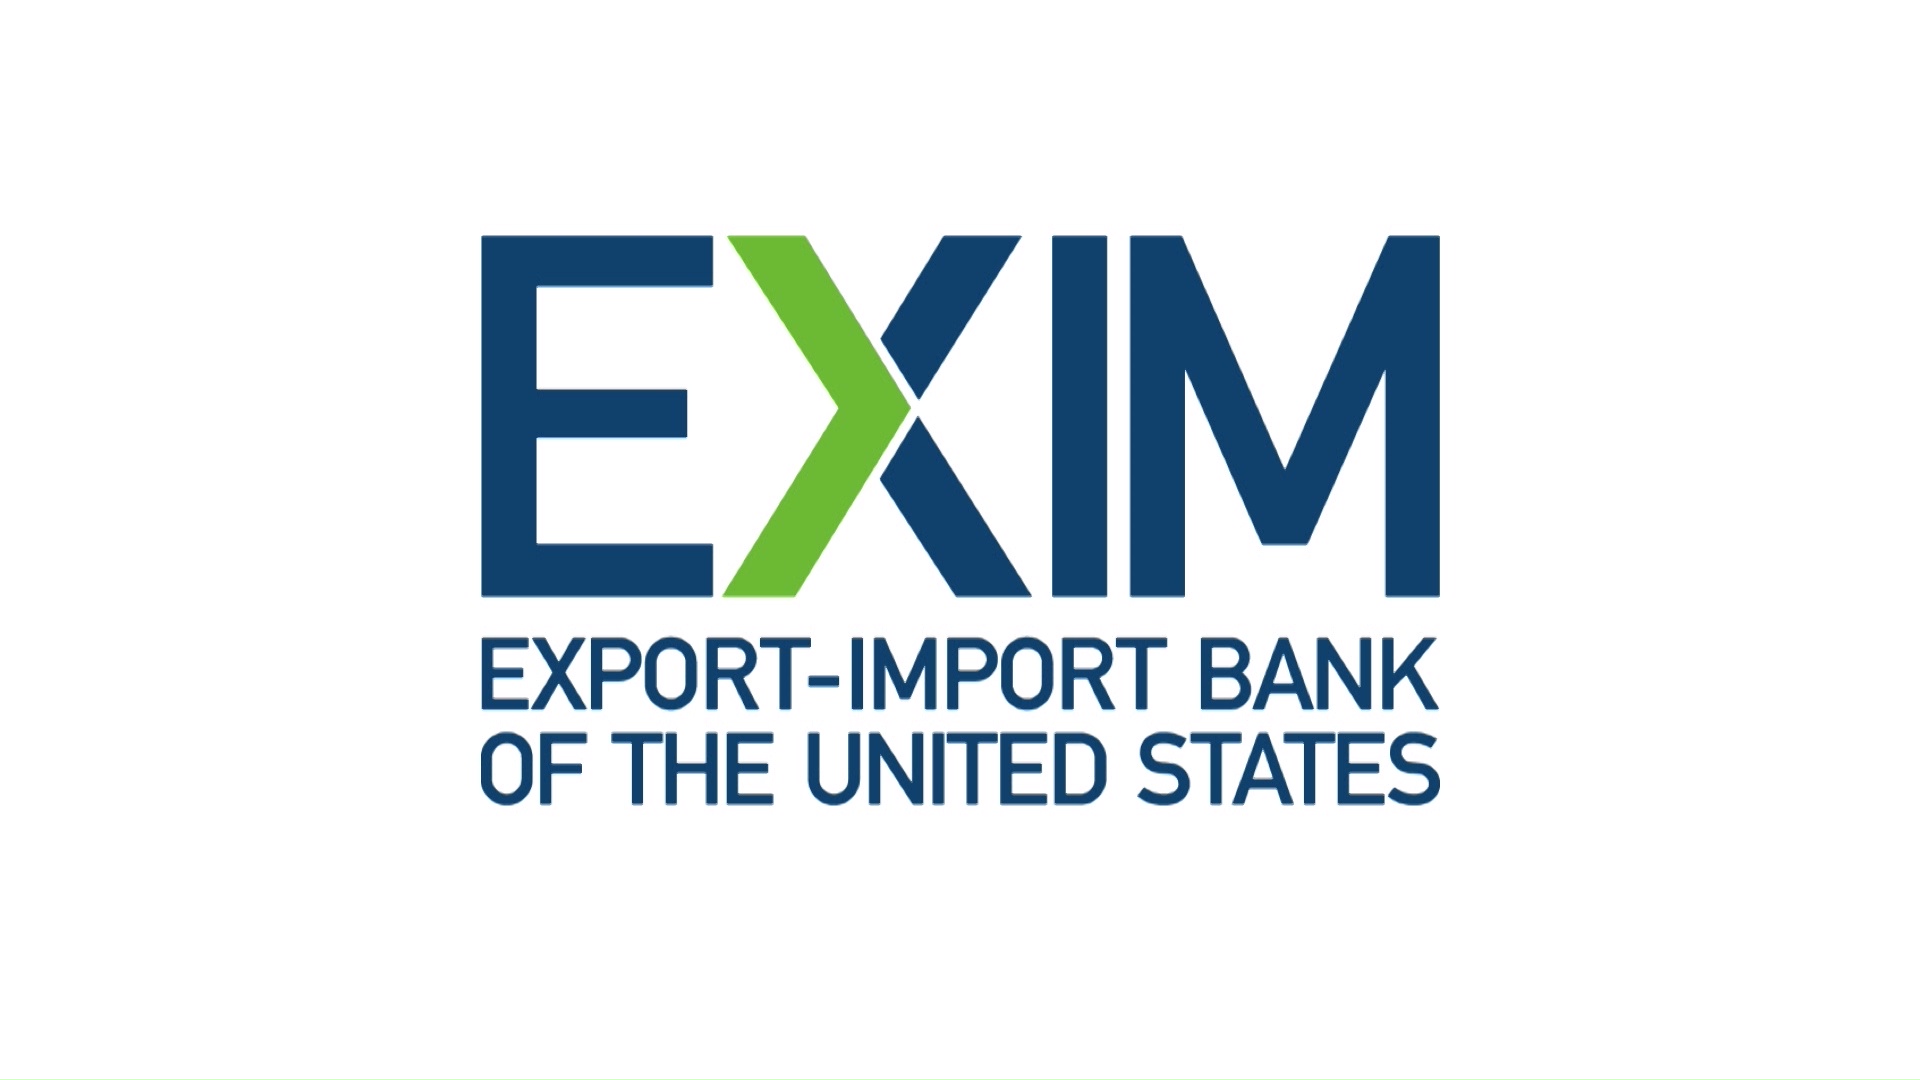 Bank import. Экспортно-импортный банк США. Export-Import Bank of the United States. Логотип Exim. Банком США (Eximbank).